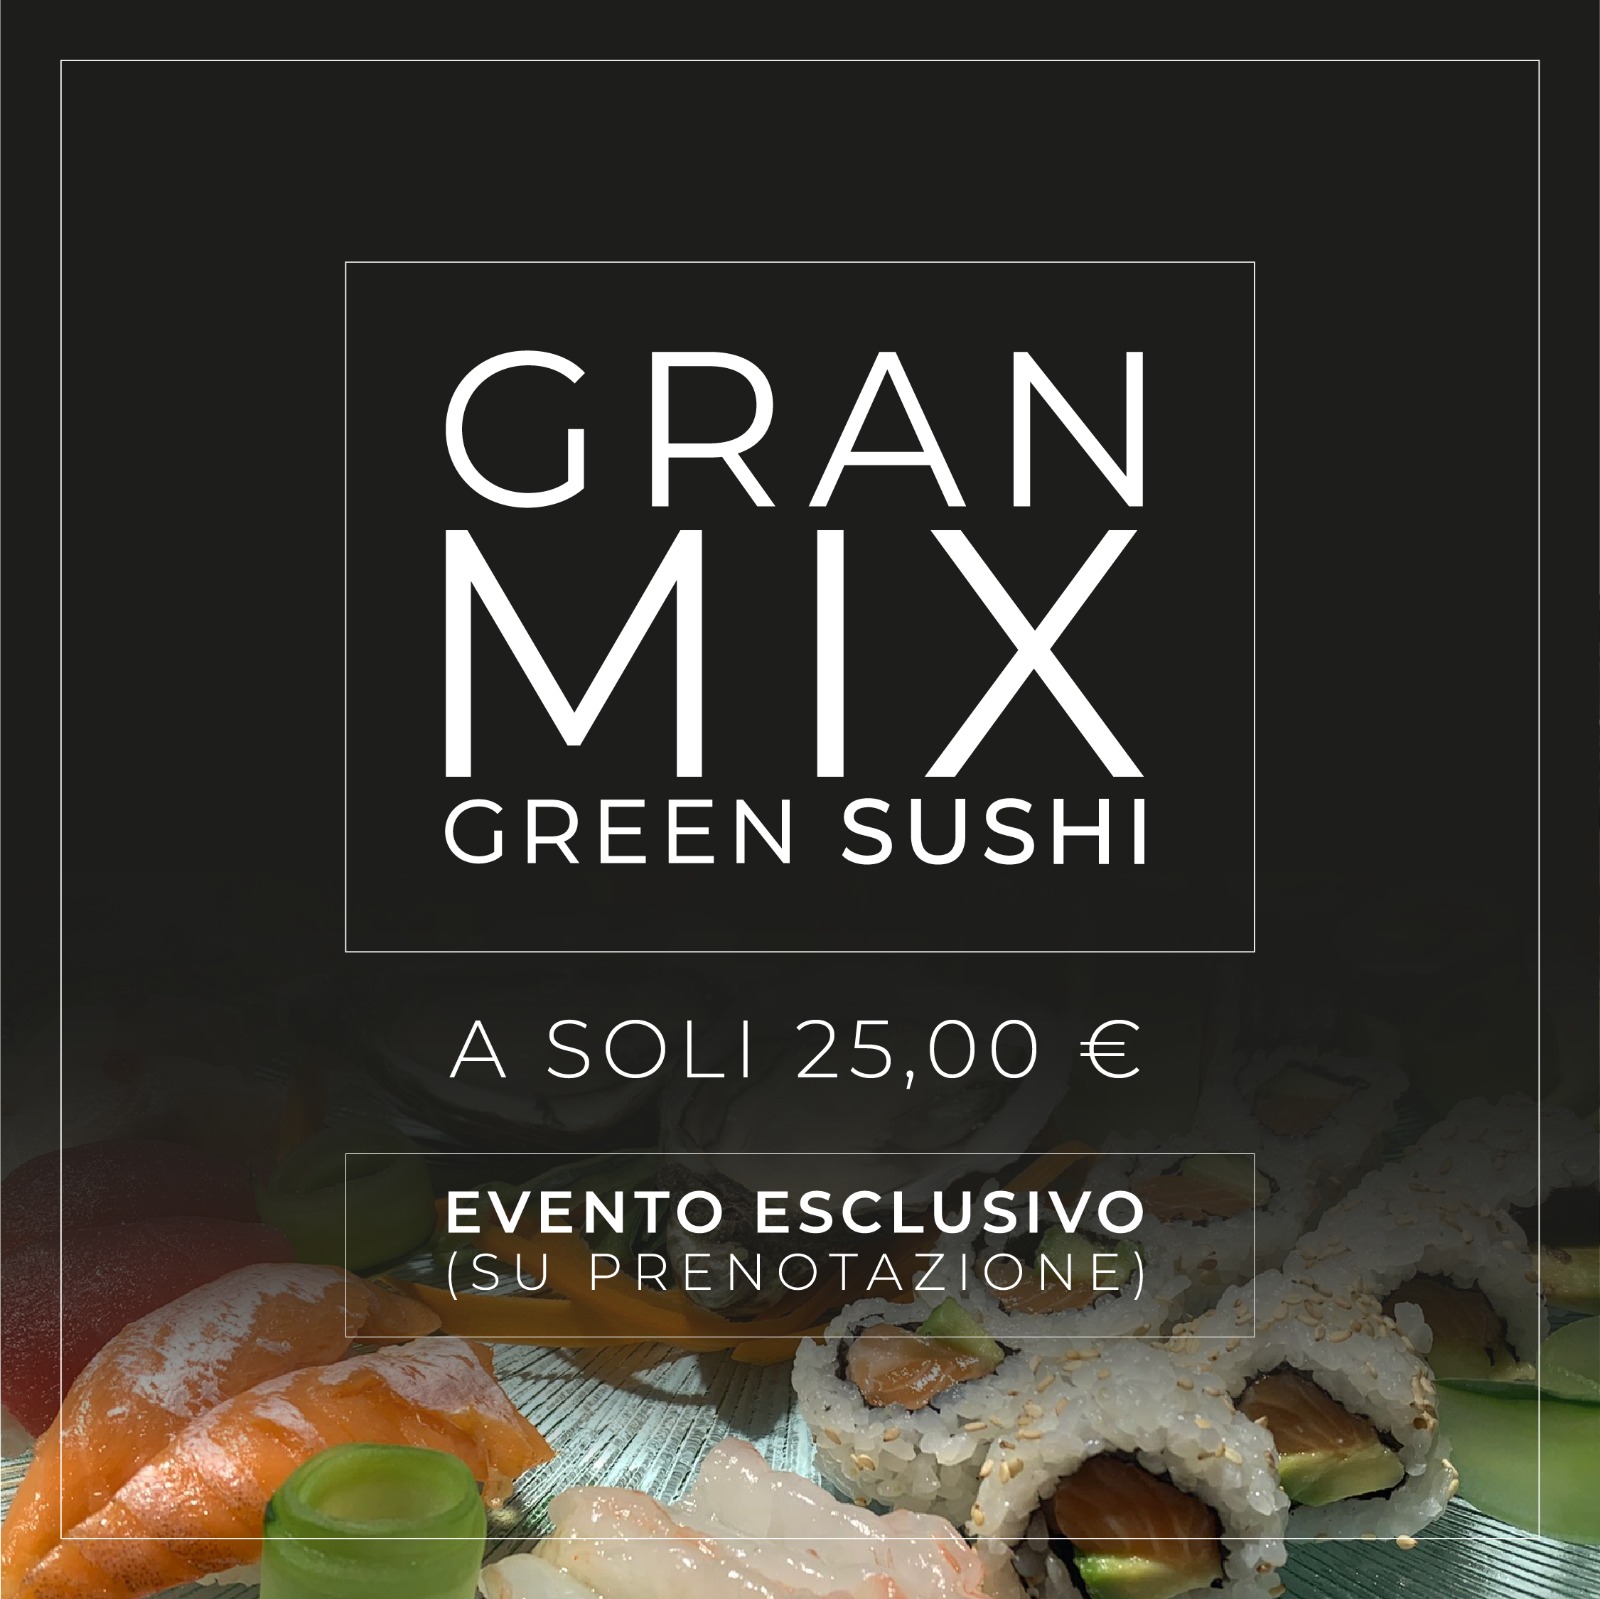 Green sushi